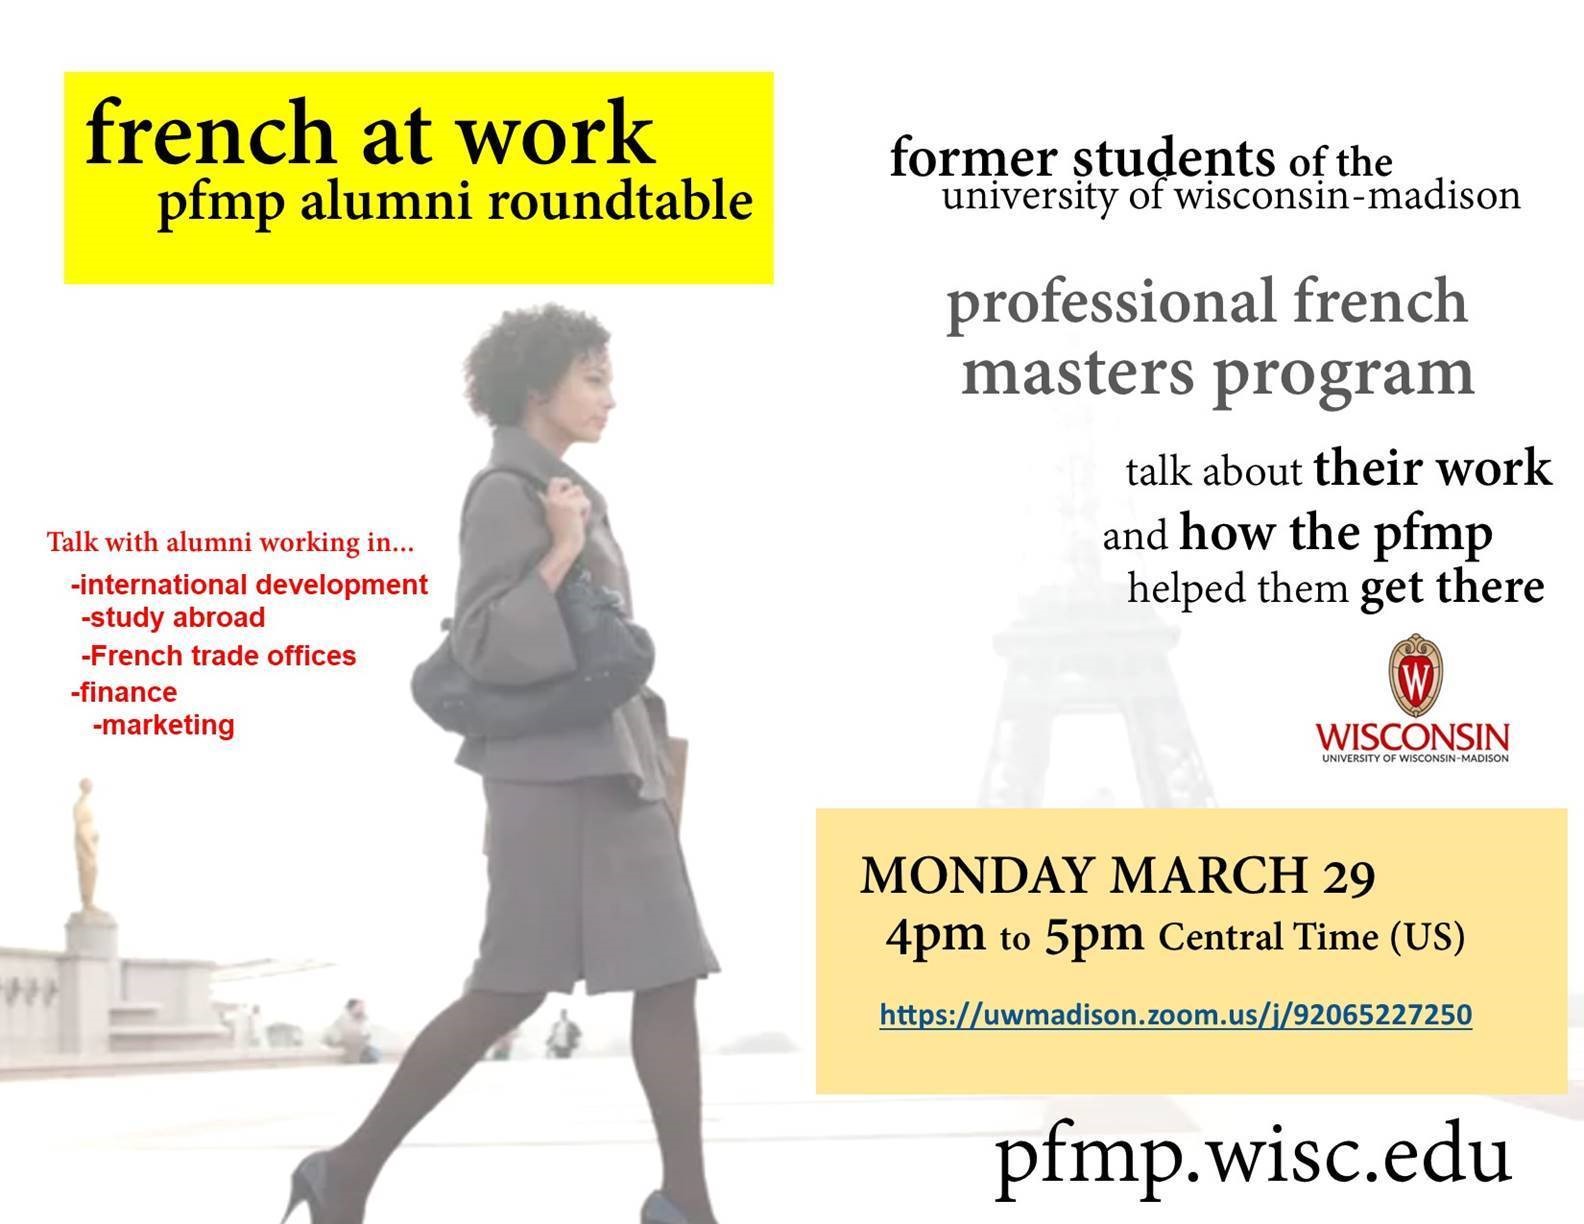 UW-Madison Professional French Masters Program Round Table